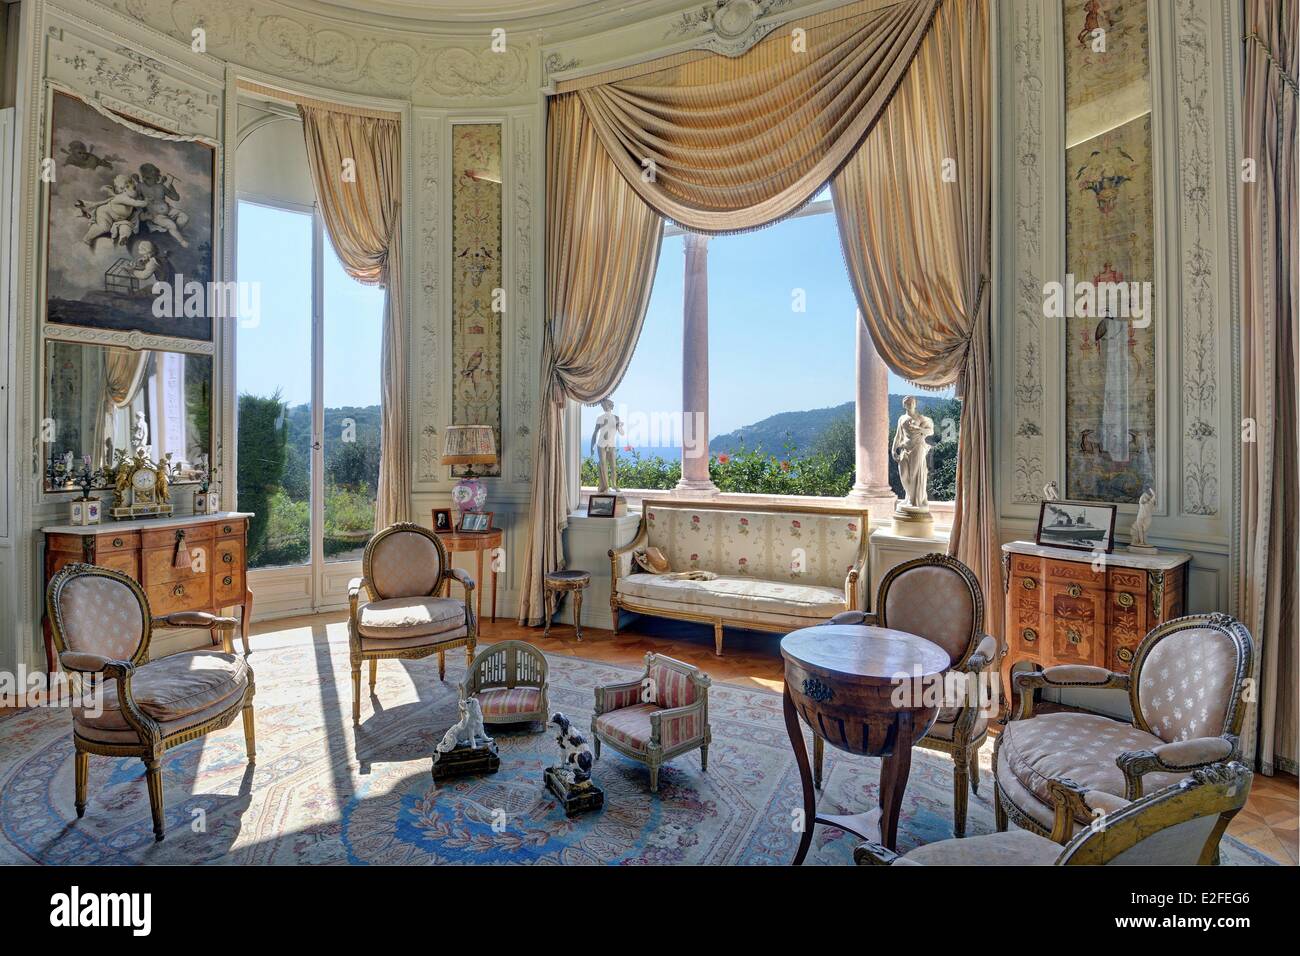 France, Alpes Maritimes, villa Ephrussi de Rothschild, the bedchamber Stock Photo